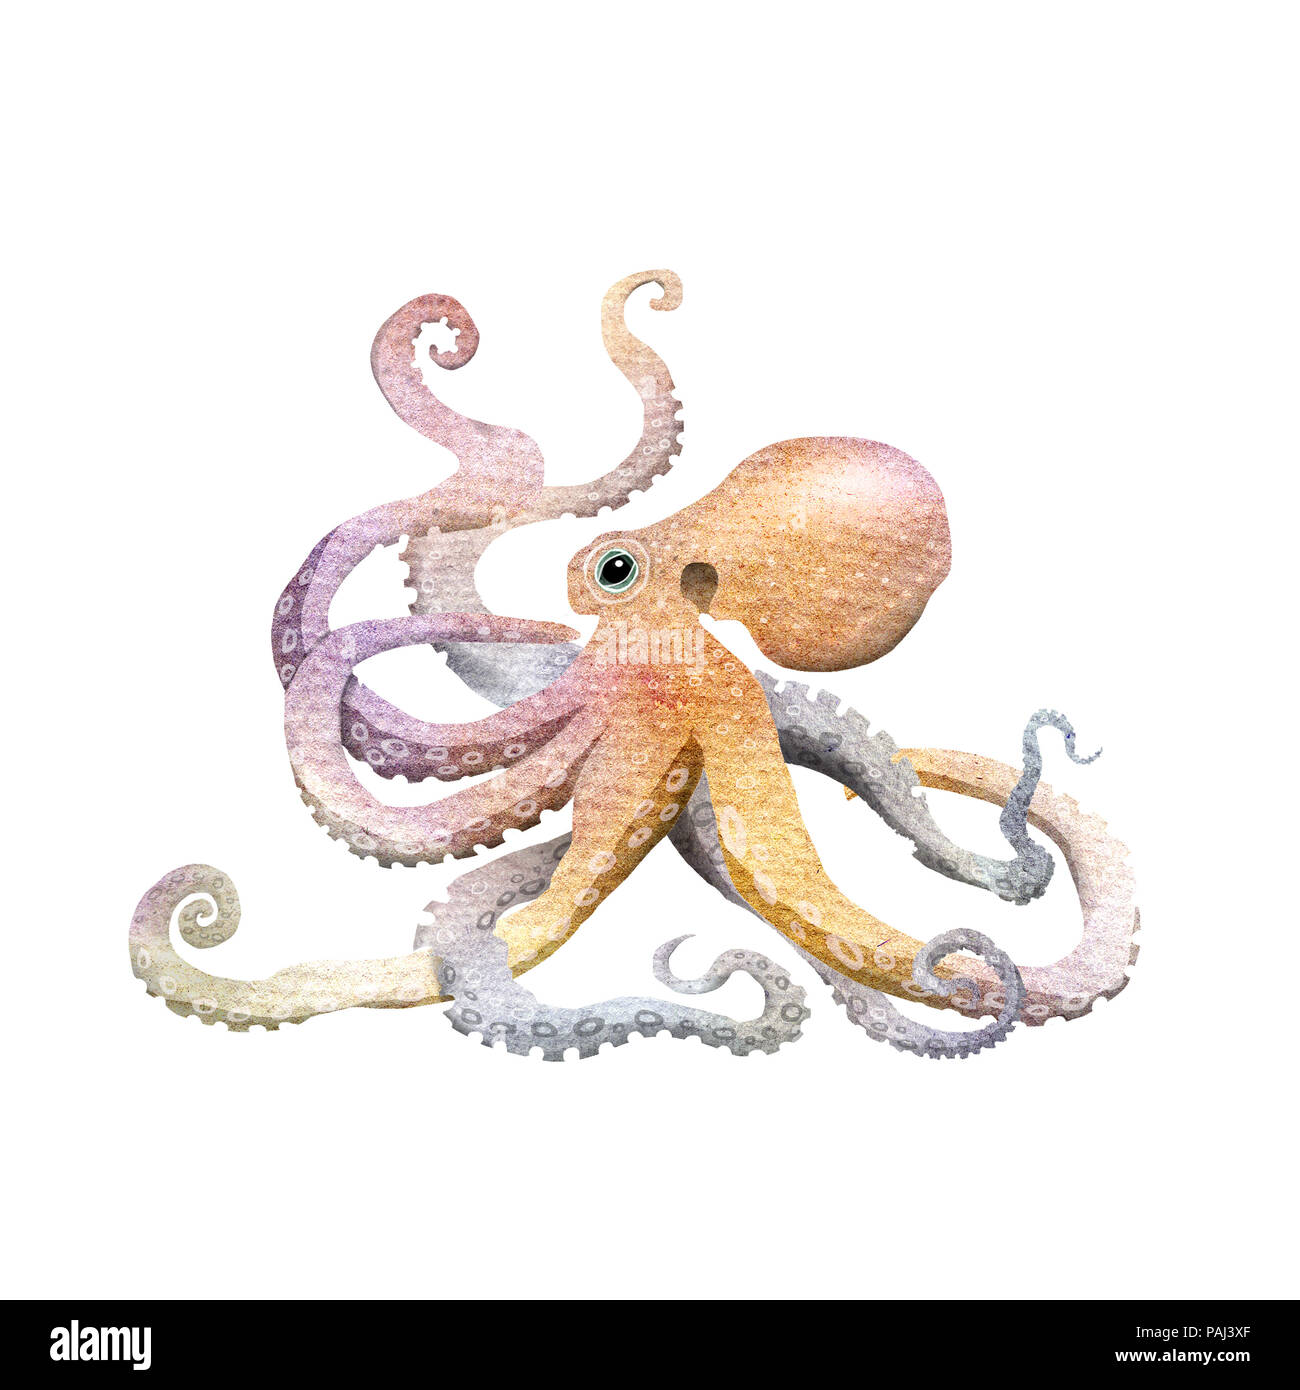 octopus illustration stockfotos  octopus illustration